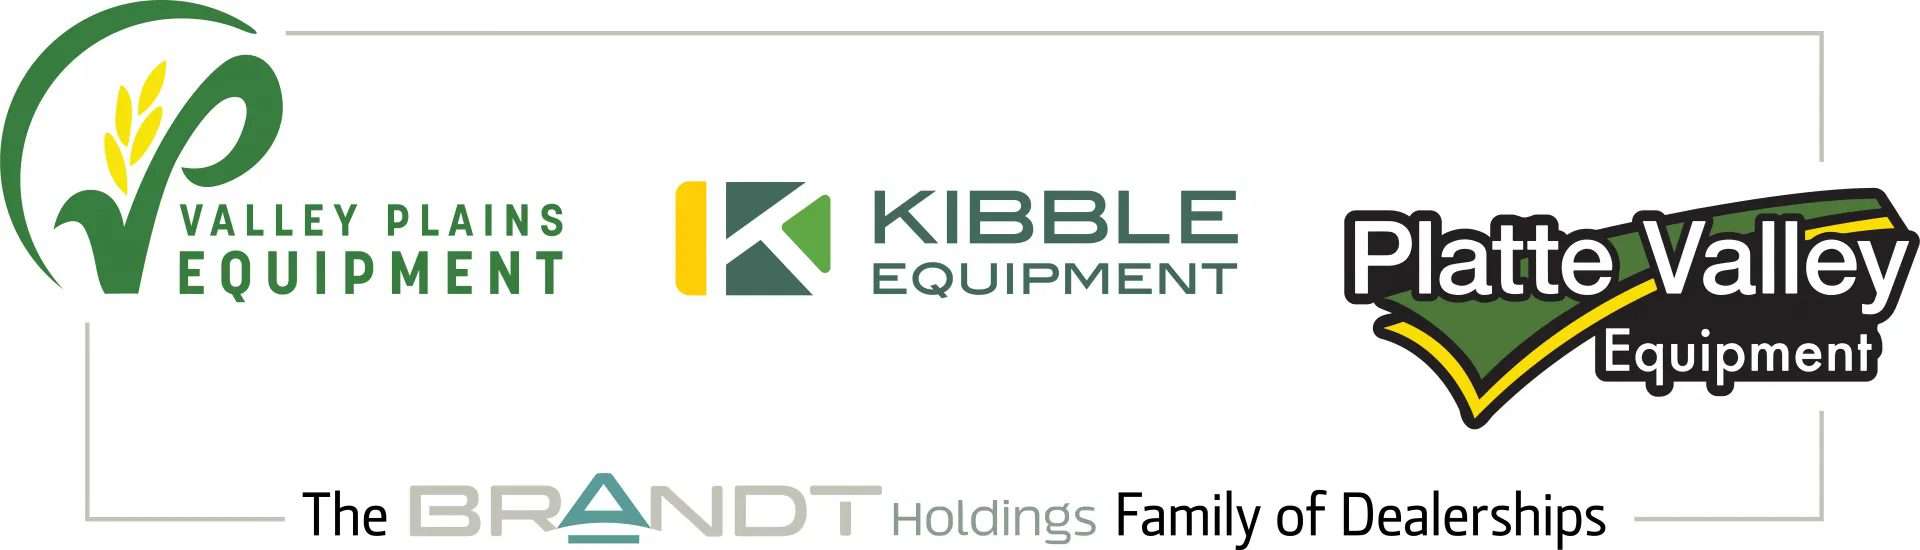 Brandt Holdings Company Agriculture Division Dealerships • Valley Plains Equipment • Kibble Equipment • Plains Valley Equipment